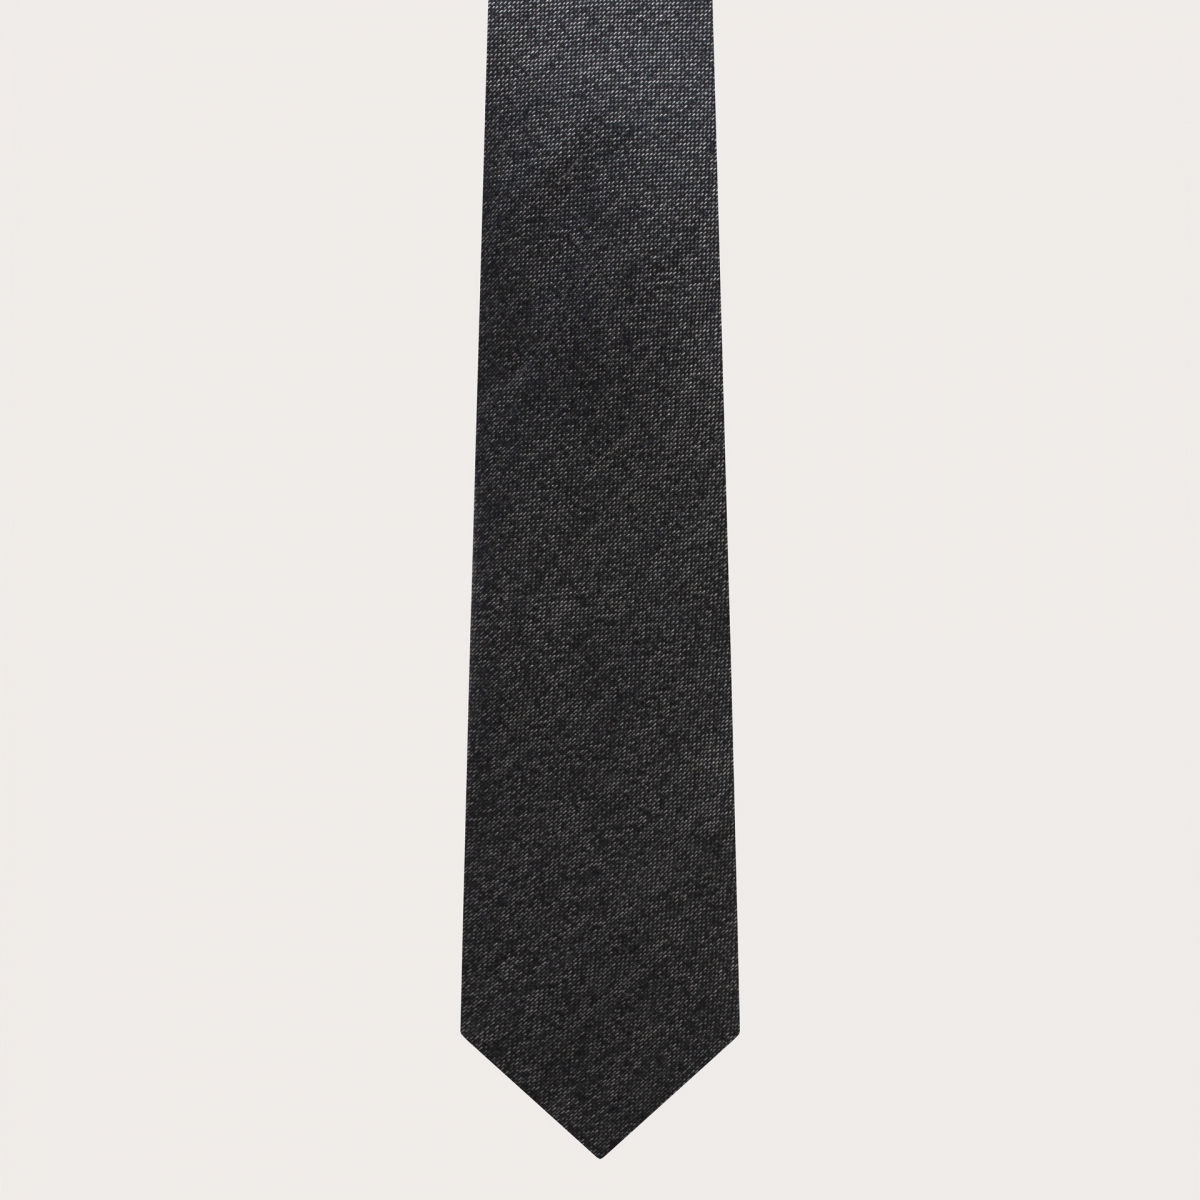 BRUCLE Raffinato set di bretelle grigio melange e cravatta coordinata in seta